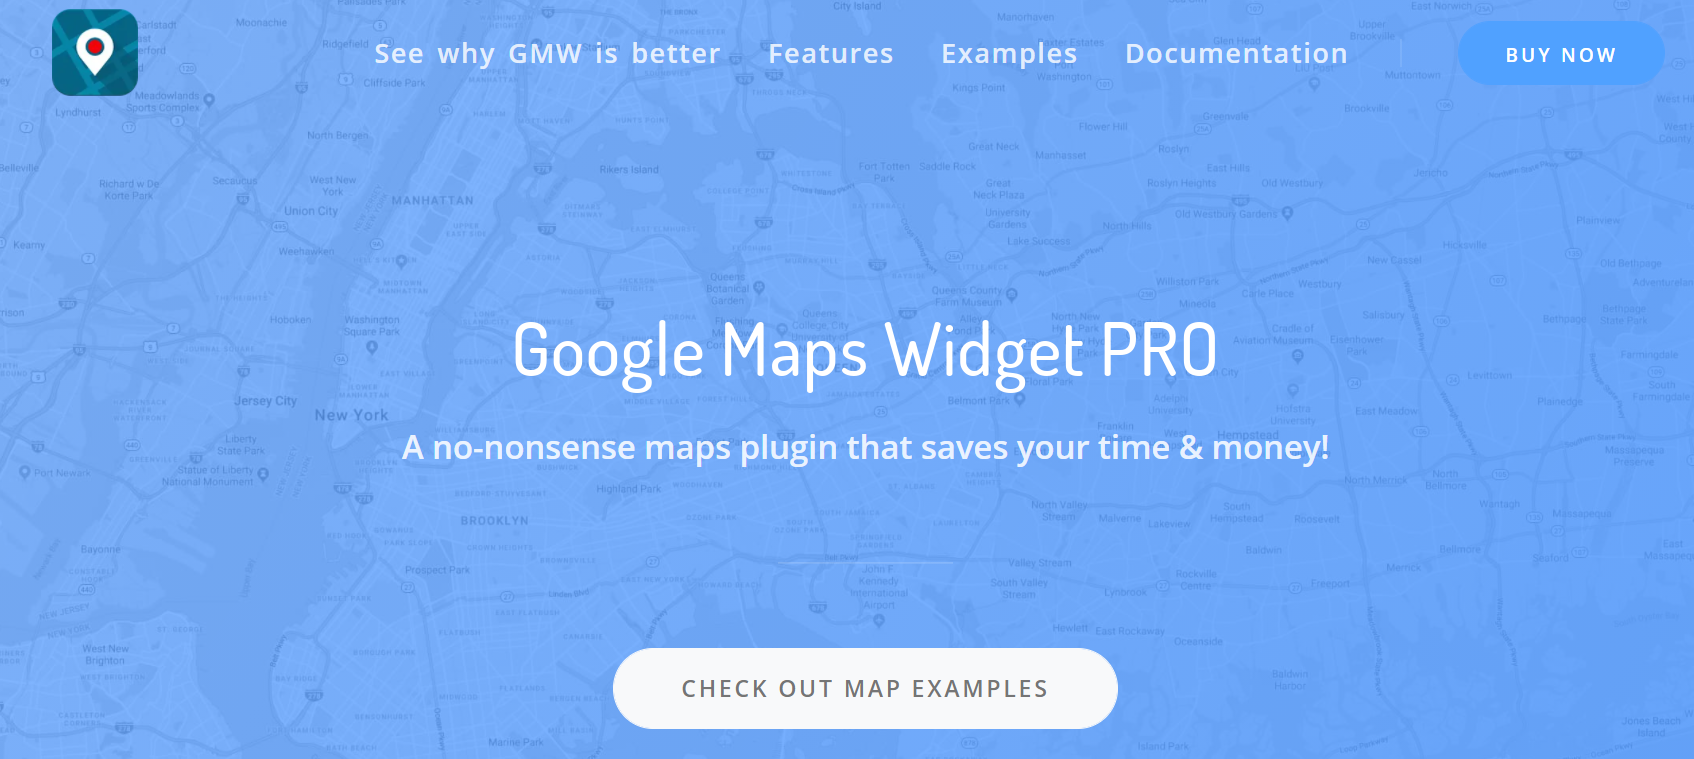 Google Maps Widget PRO homepage